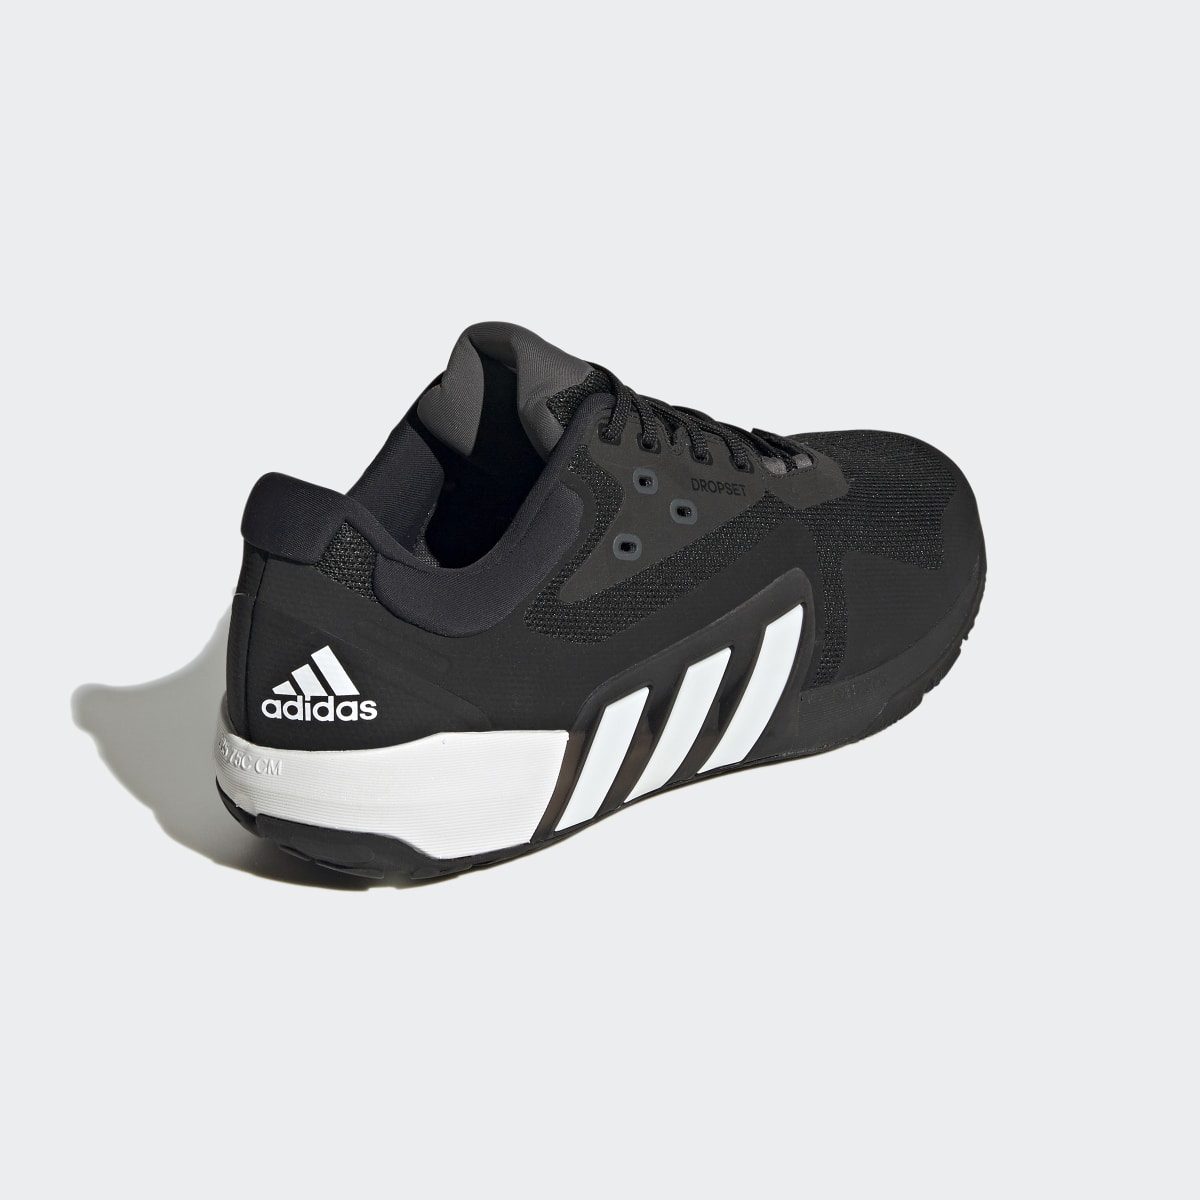 Adidas Dropset Training Shoes. 9